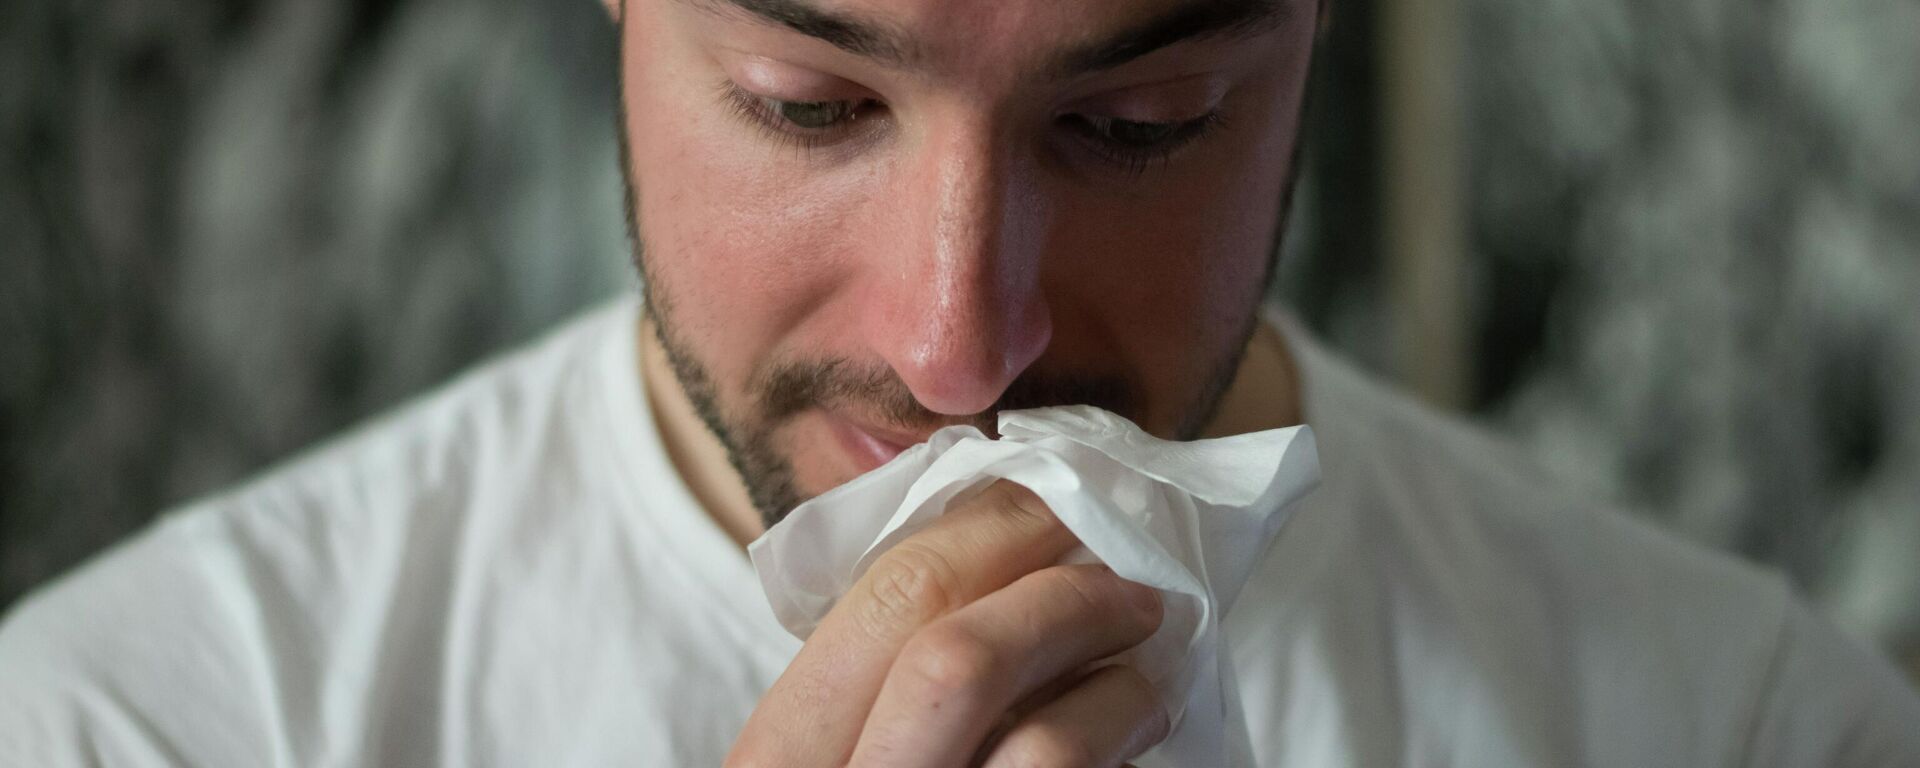 Un hombre se limpia la nariz con un pañuelo de papel - Sputnik Mundo, 1920, 04.05.2021